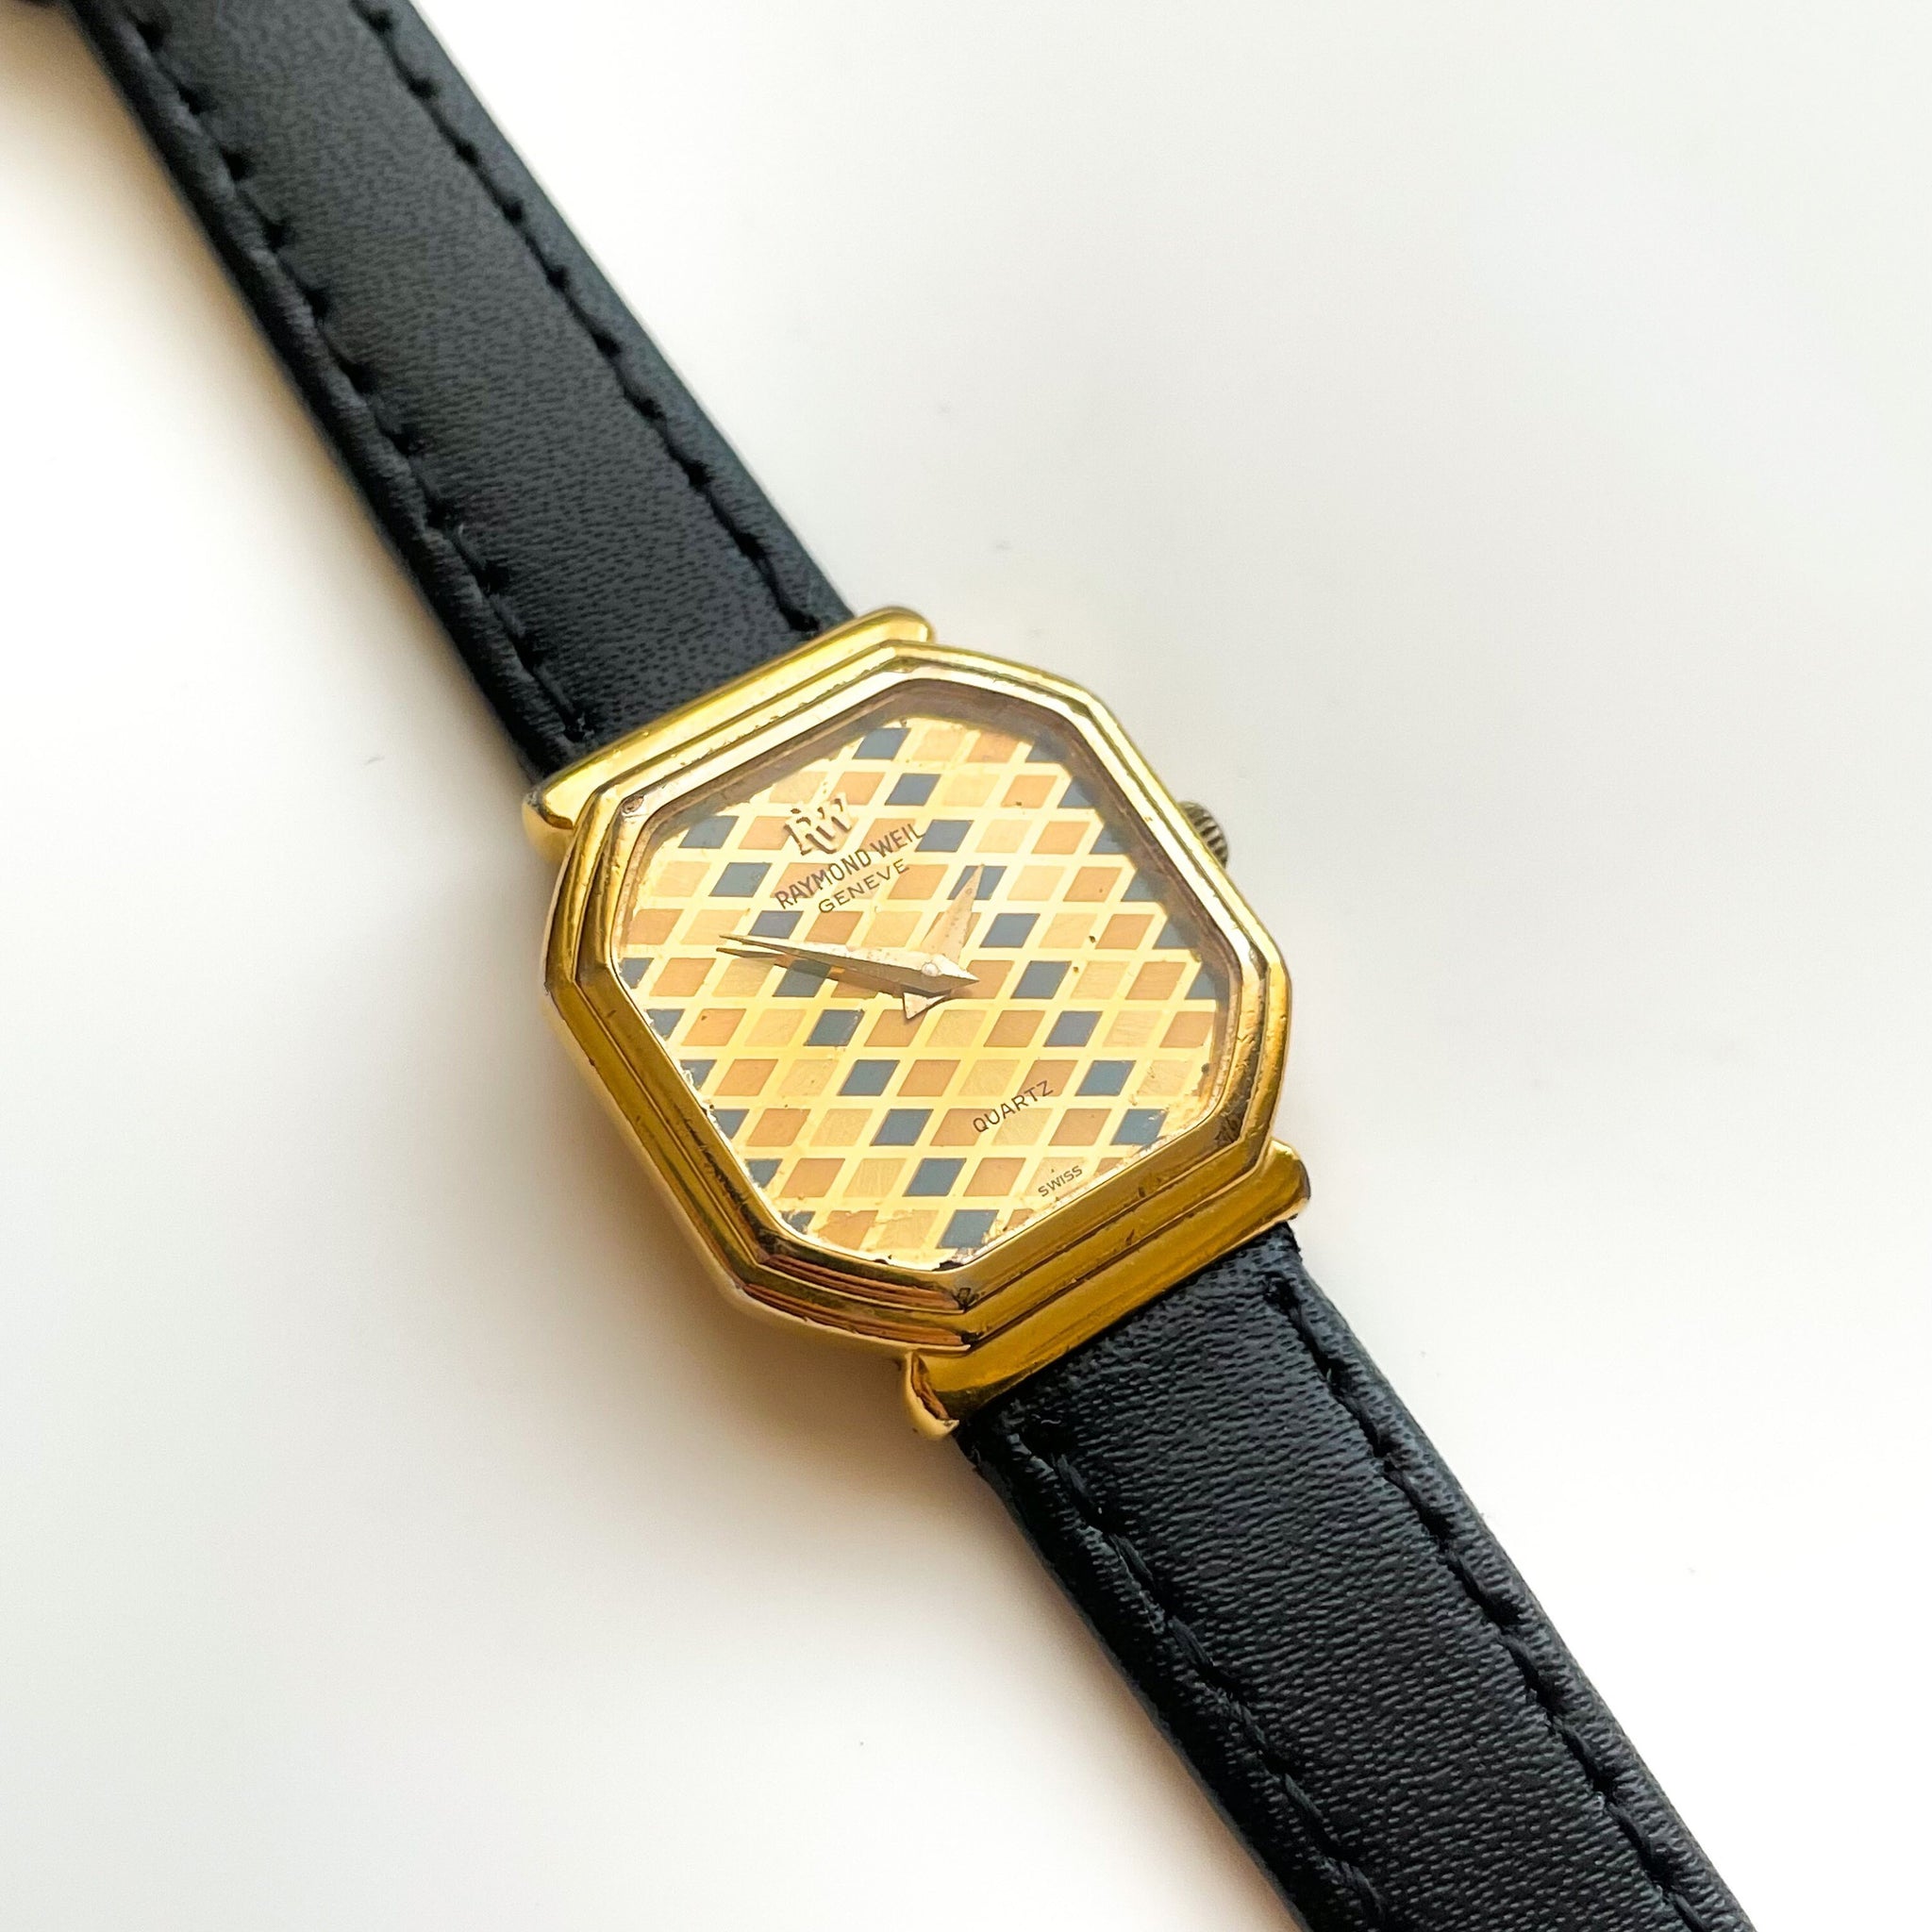 Classic Silver Dial Leather Quartz Watch - Toccata | RAYMOND WEIL